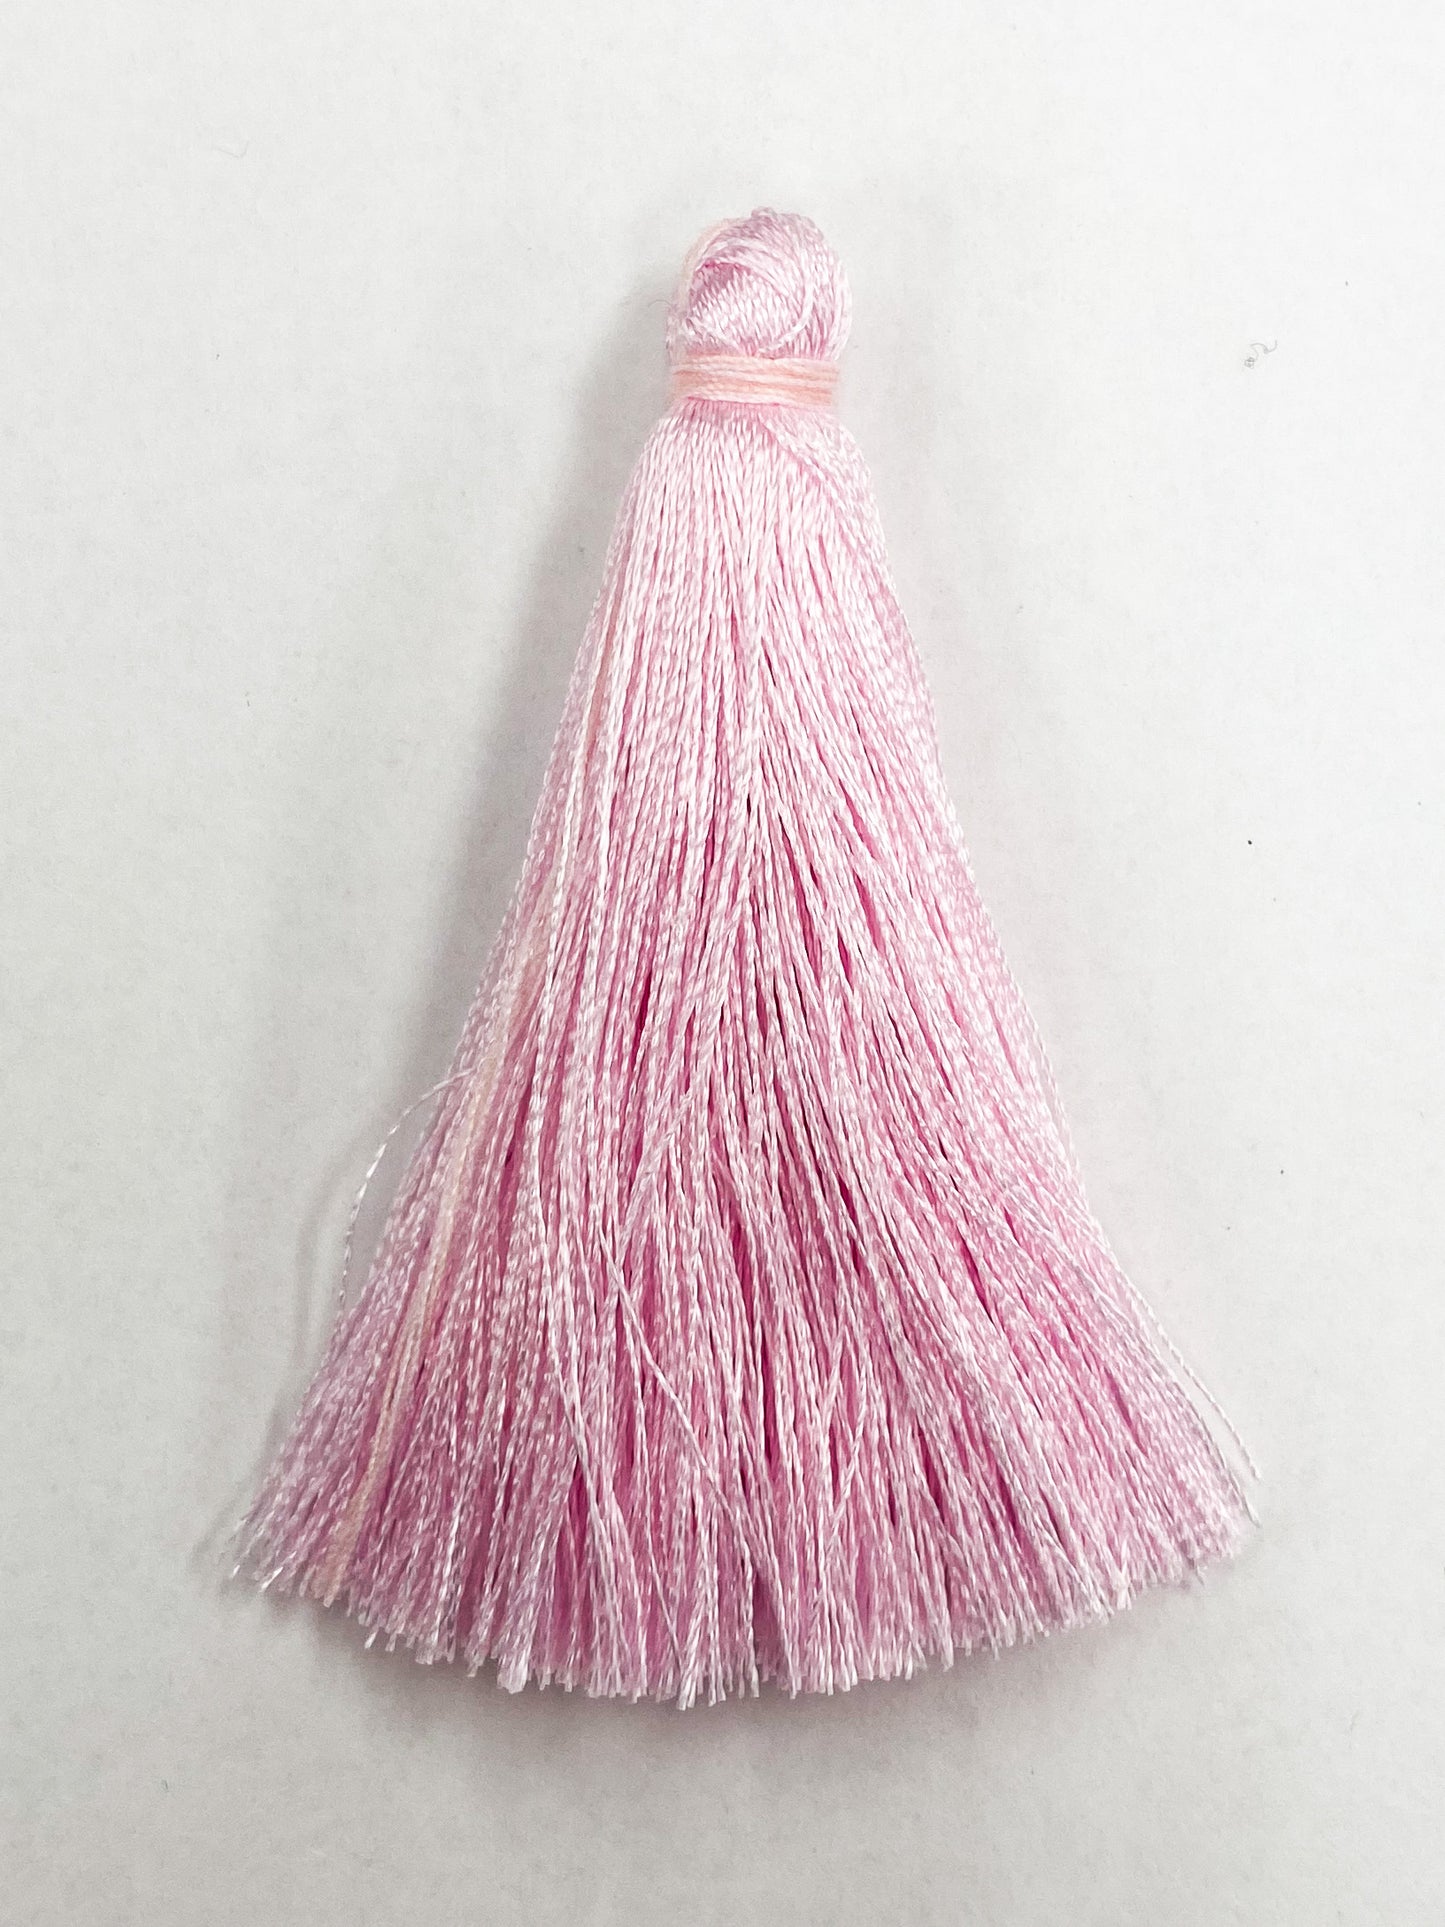 Light Pink Coloured Tassel, 65mmL x 10mm. Polyester fibre.